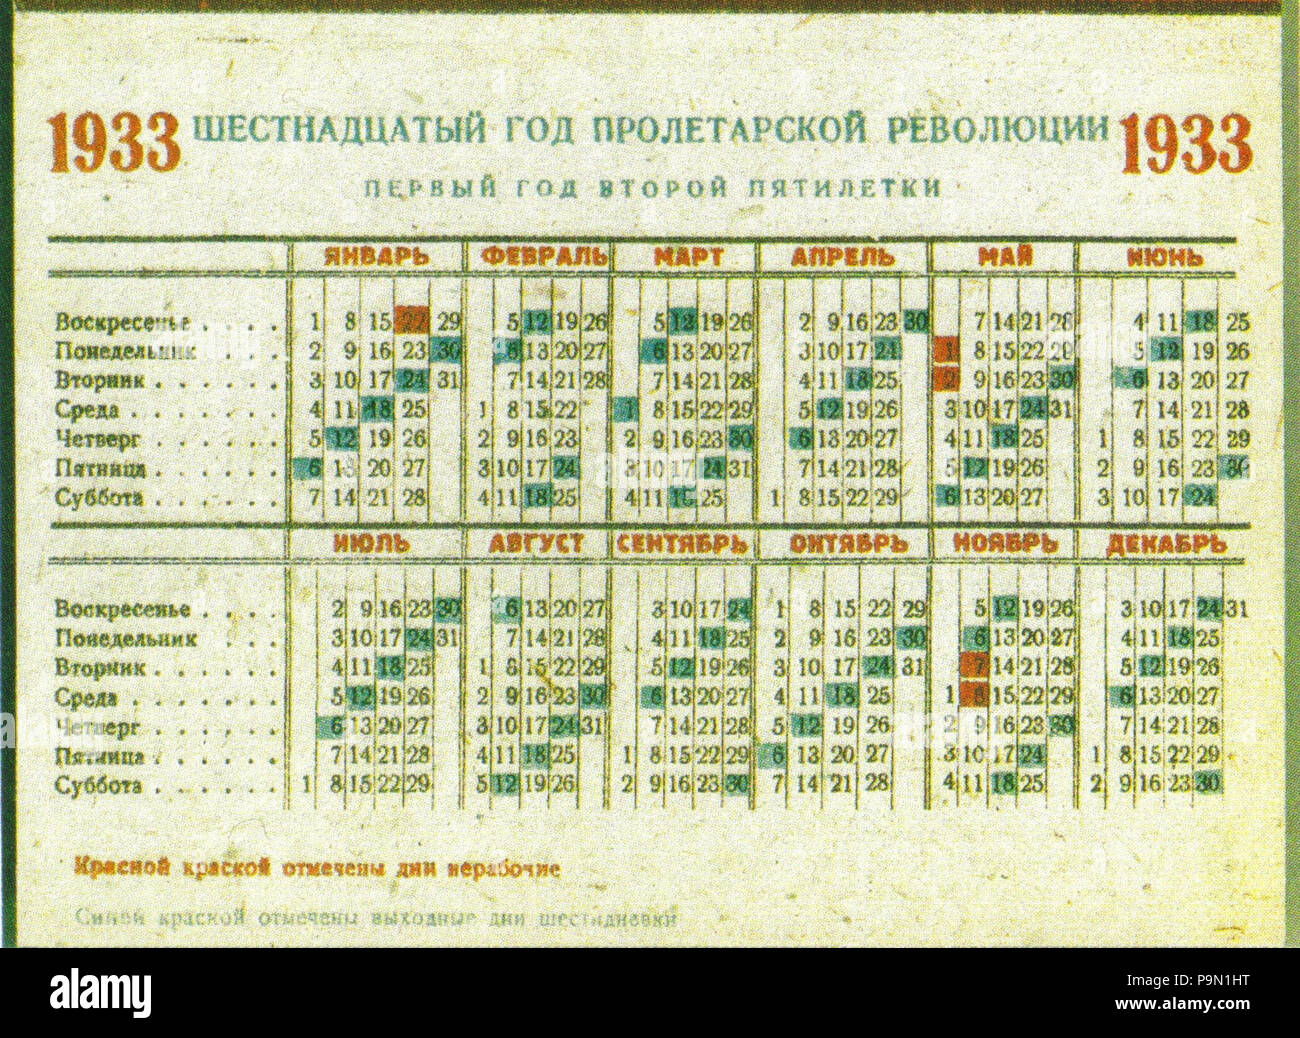 300 Soviet calendar 1933 color Stock Photo - Alamy